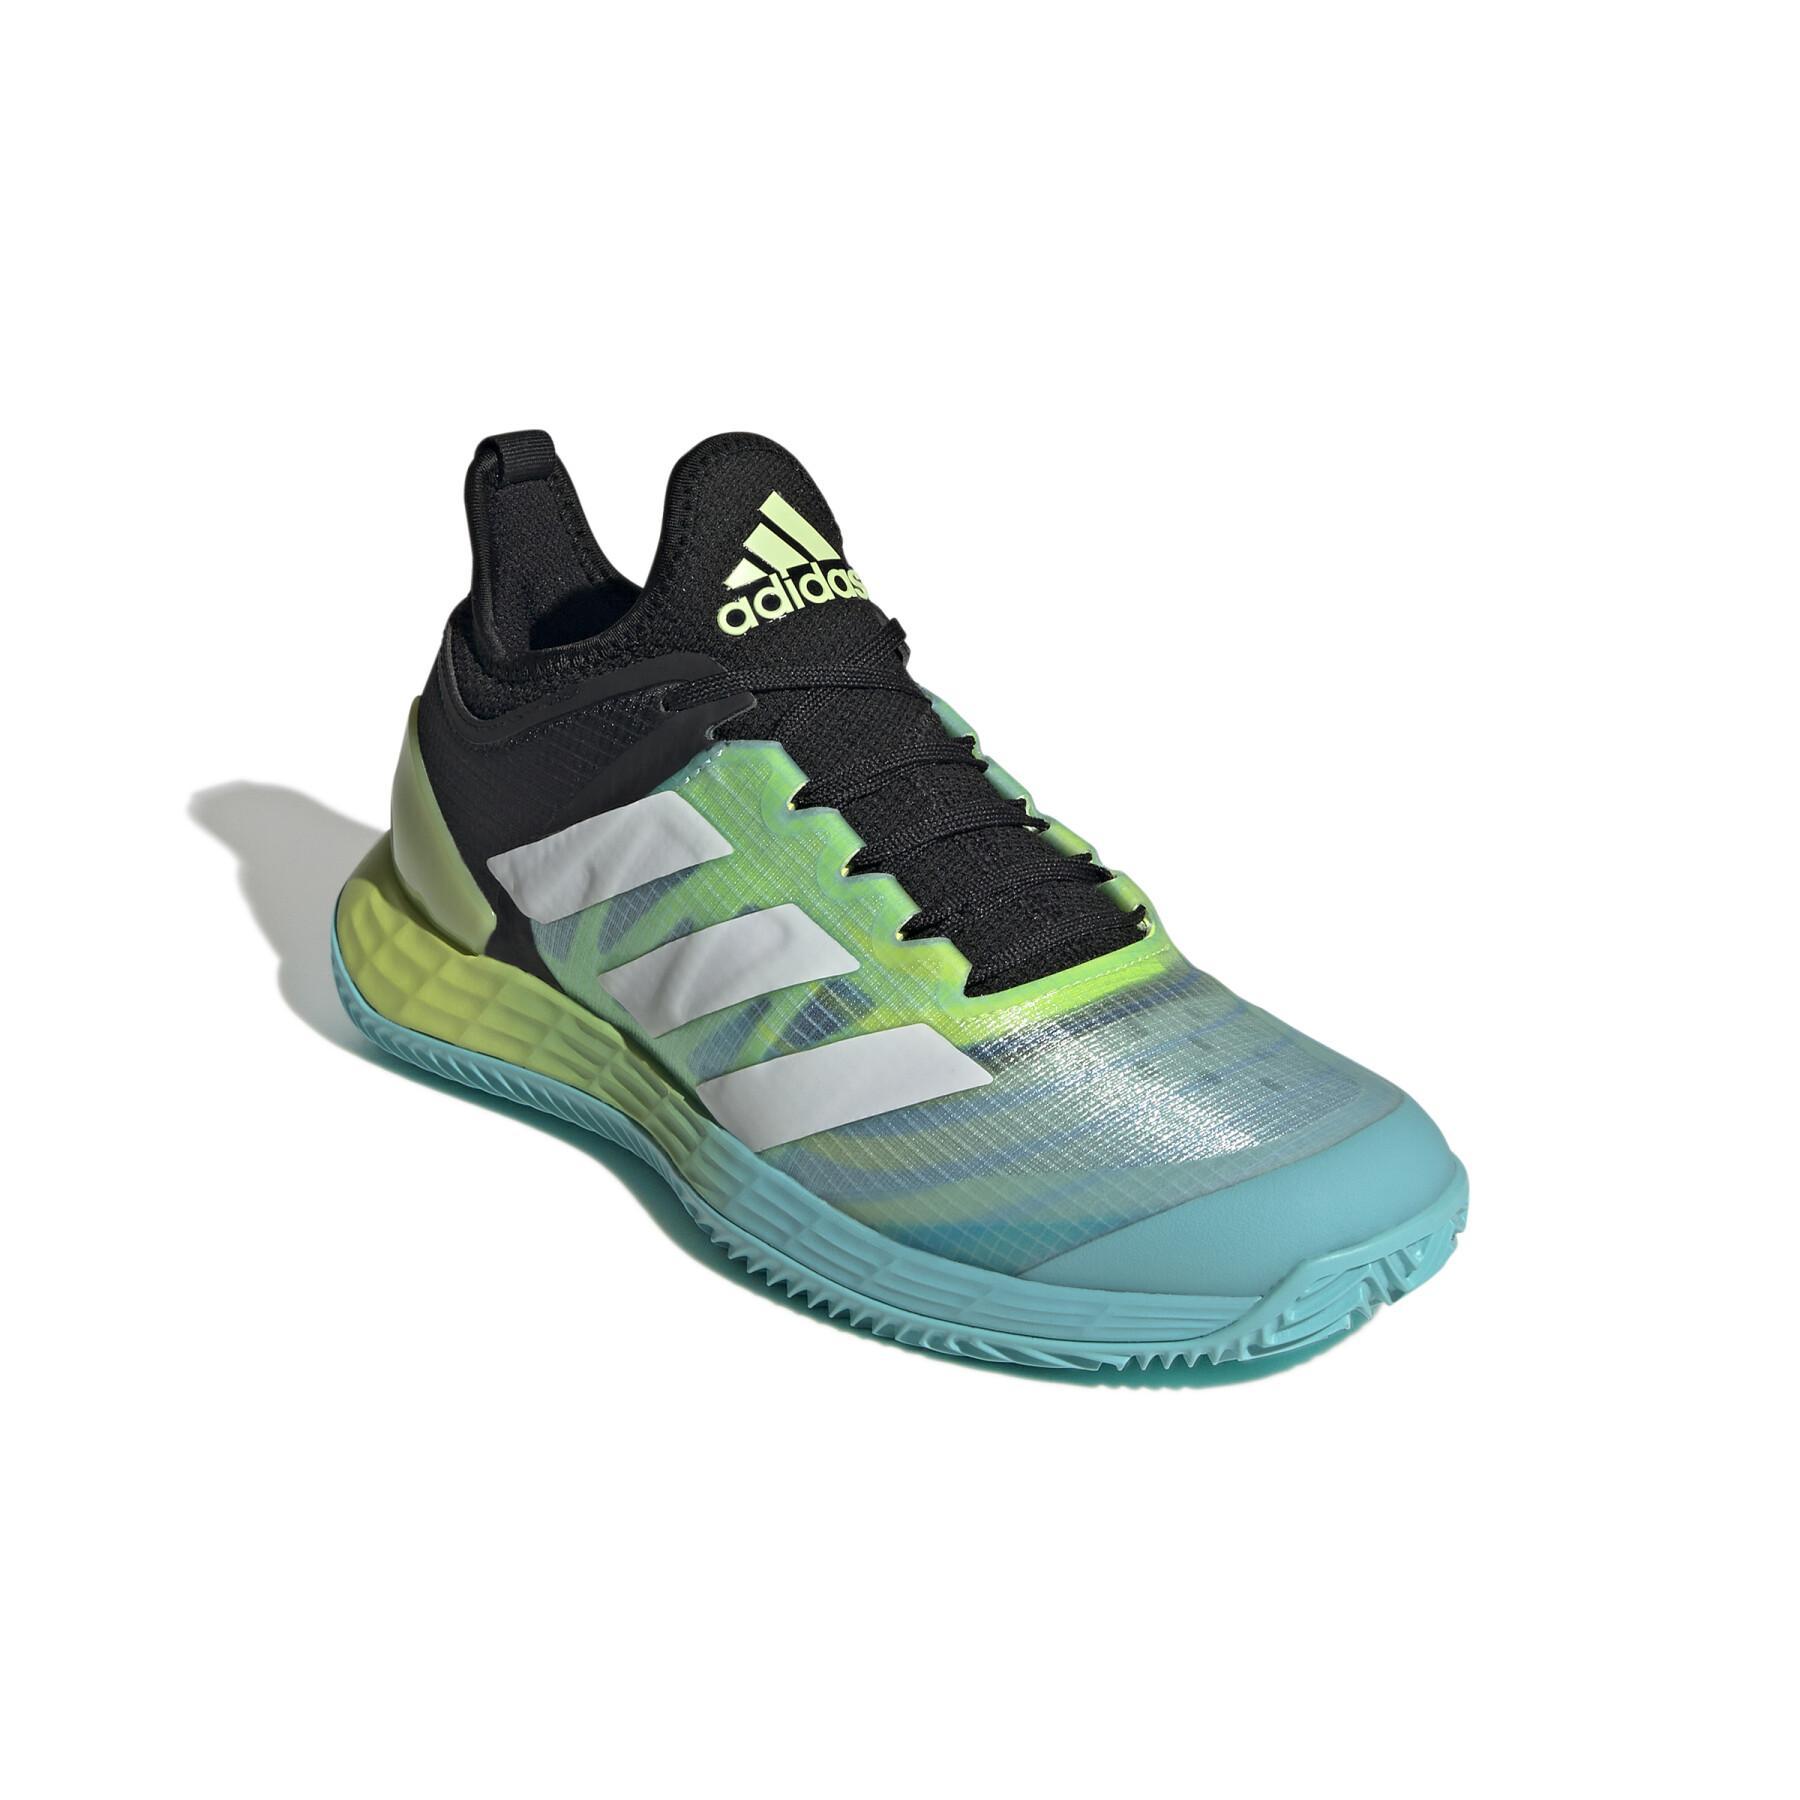 Women's tennis shoes adidas 150 Adizero Ubersonic 4 Clay